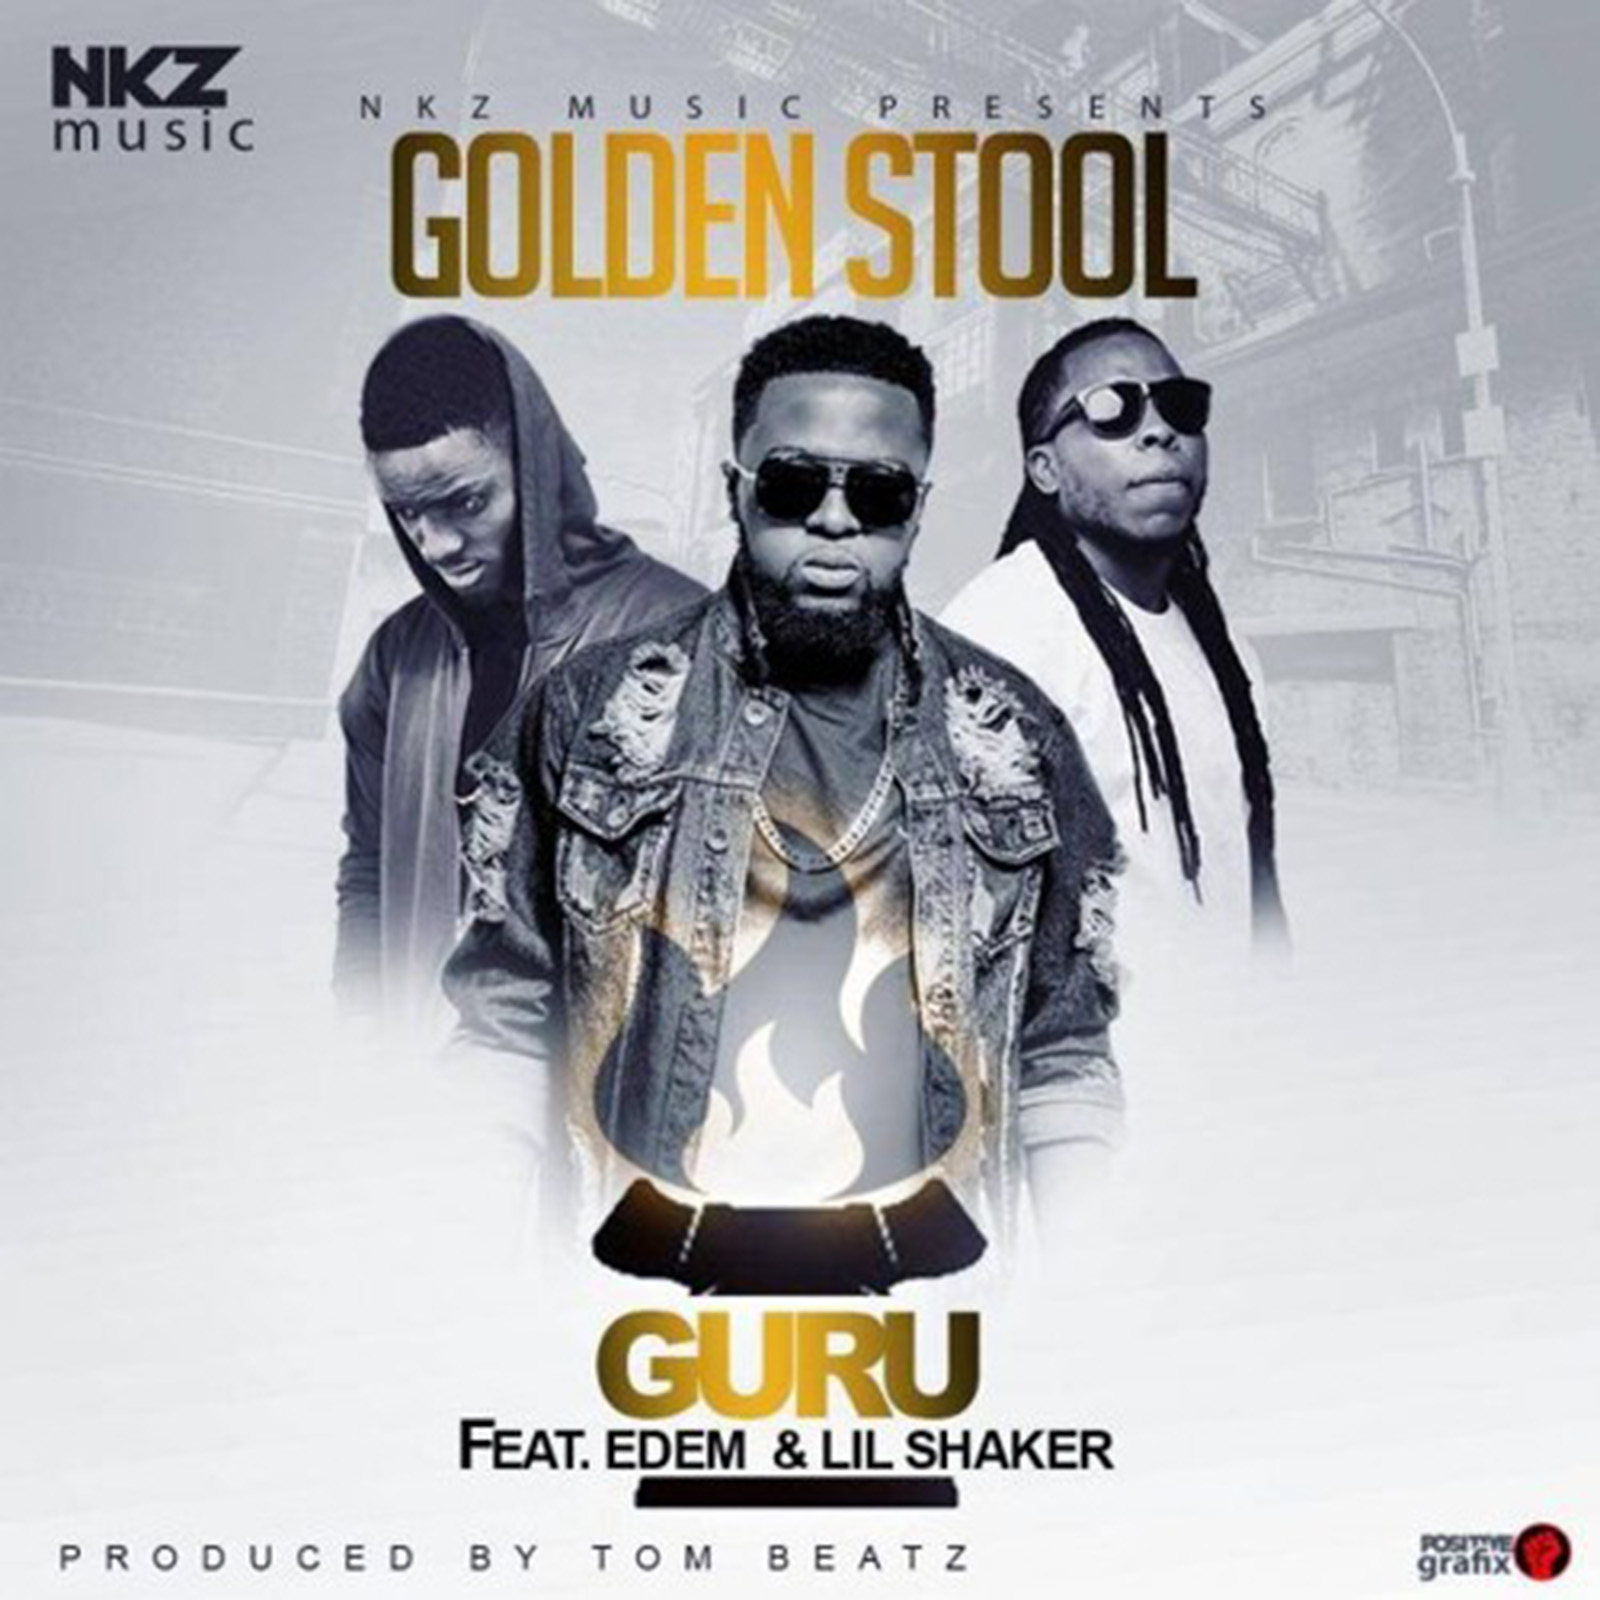 Golden Stool by Guru feat. Edem & Lil Shaker